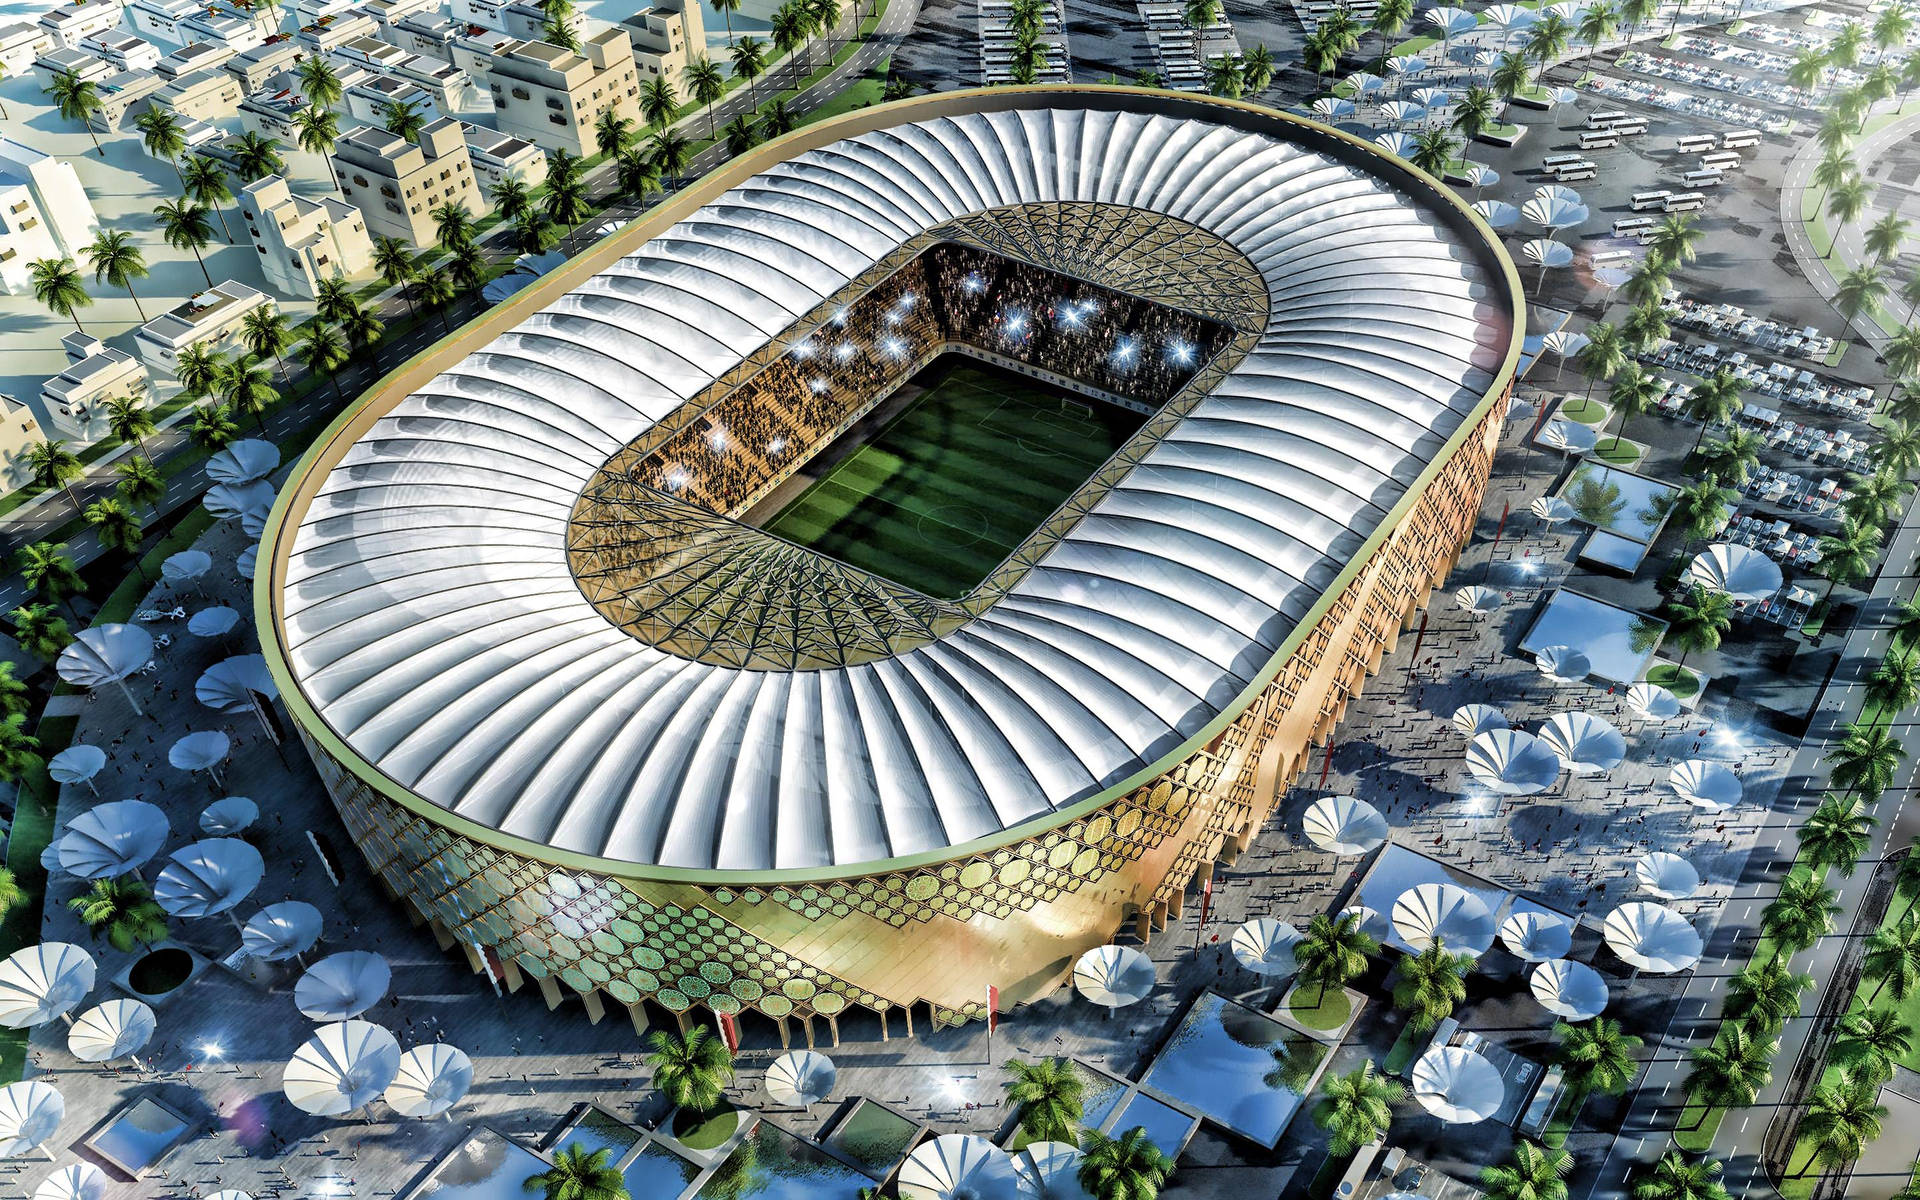 Download Qatar University Stadium Fifa World Cup 2022 Wallpaper | Wallpapers .com